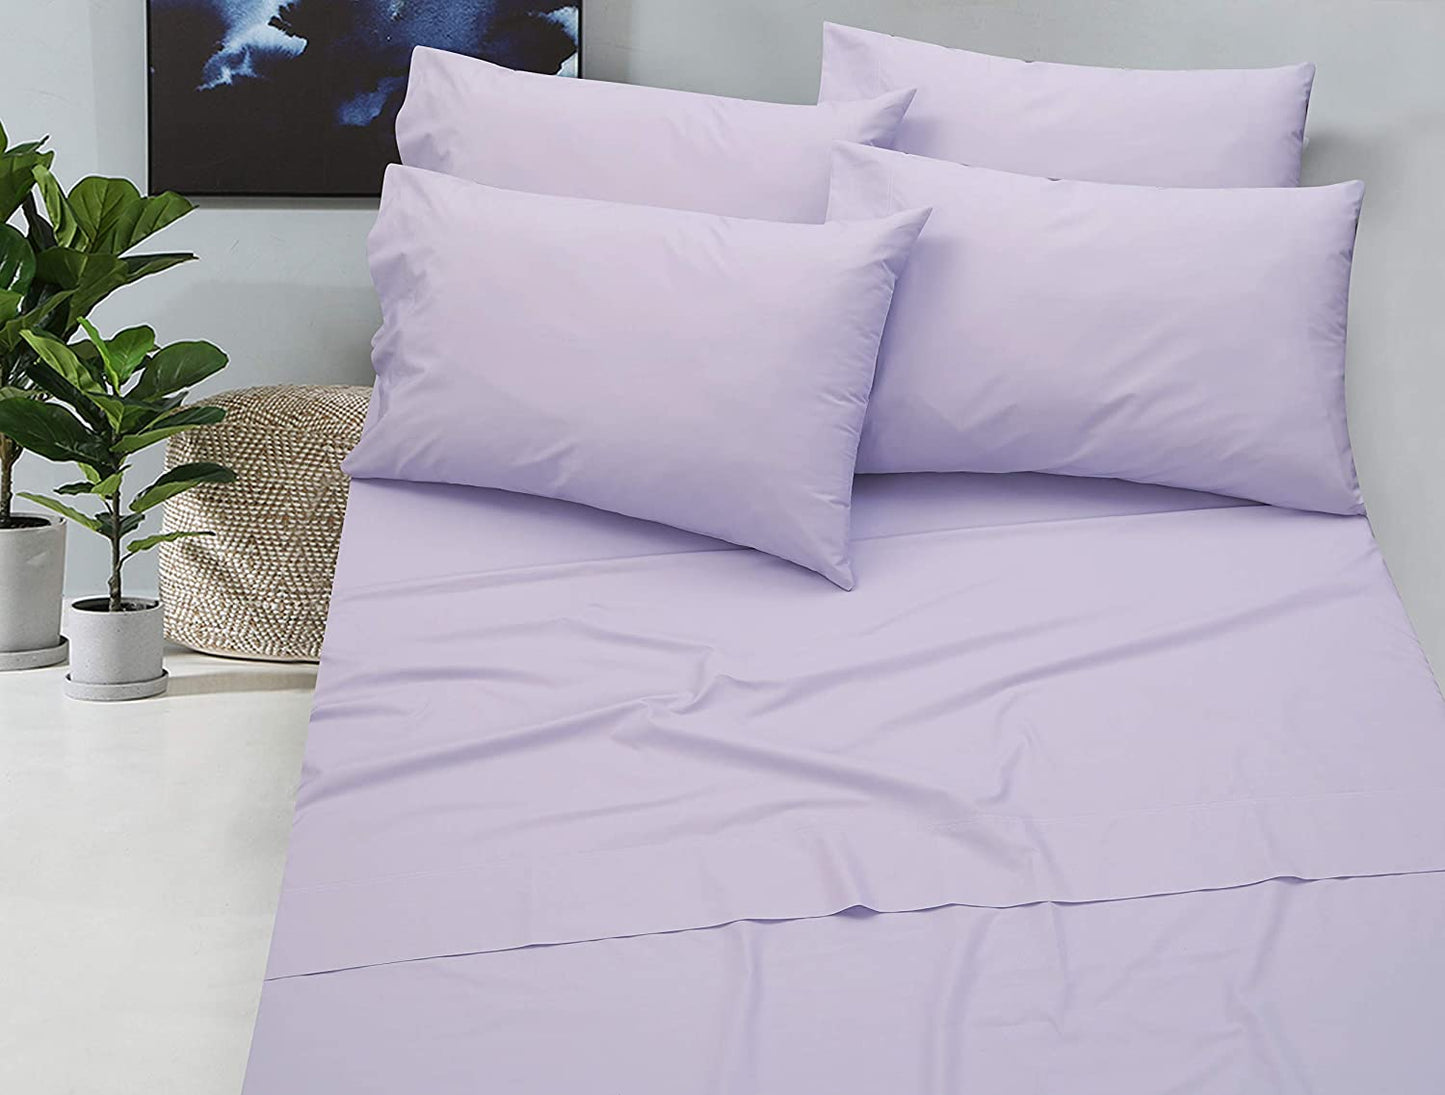 BLC - 300 TC - Cotton Fabric - Modern Sheet Set for Home & Hotel